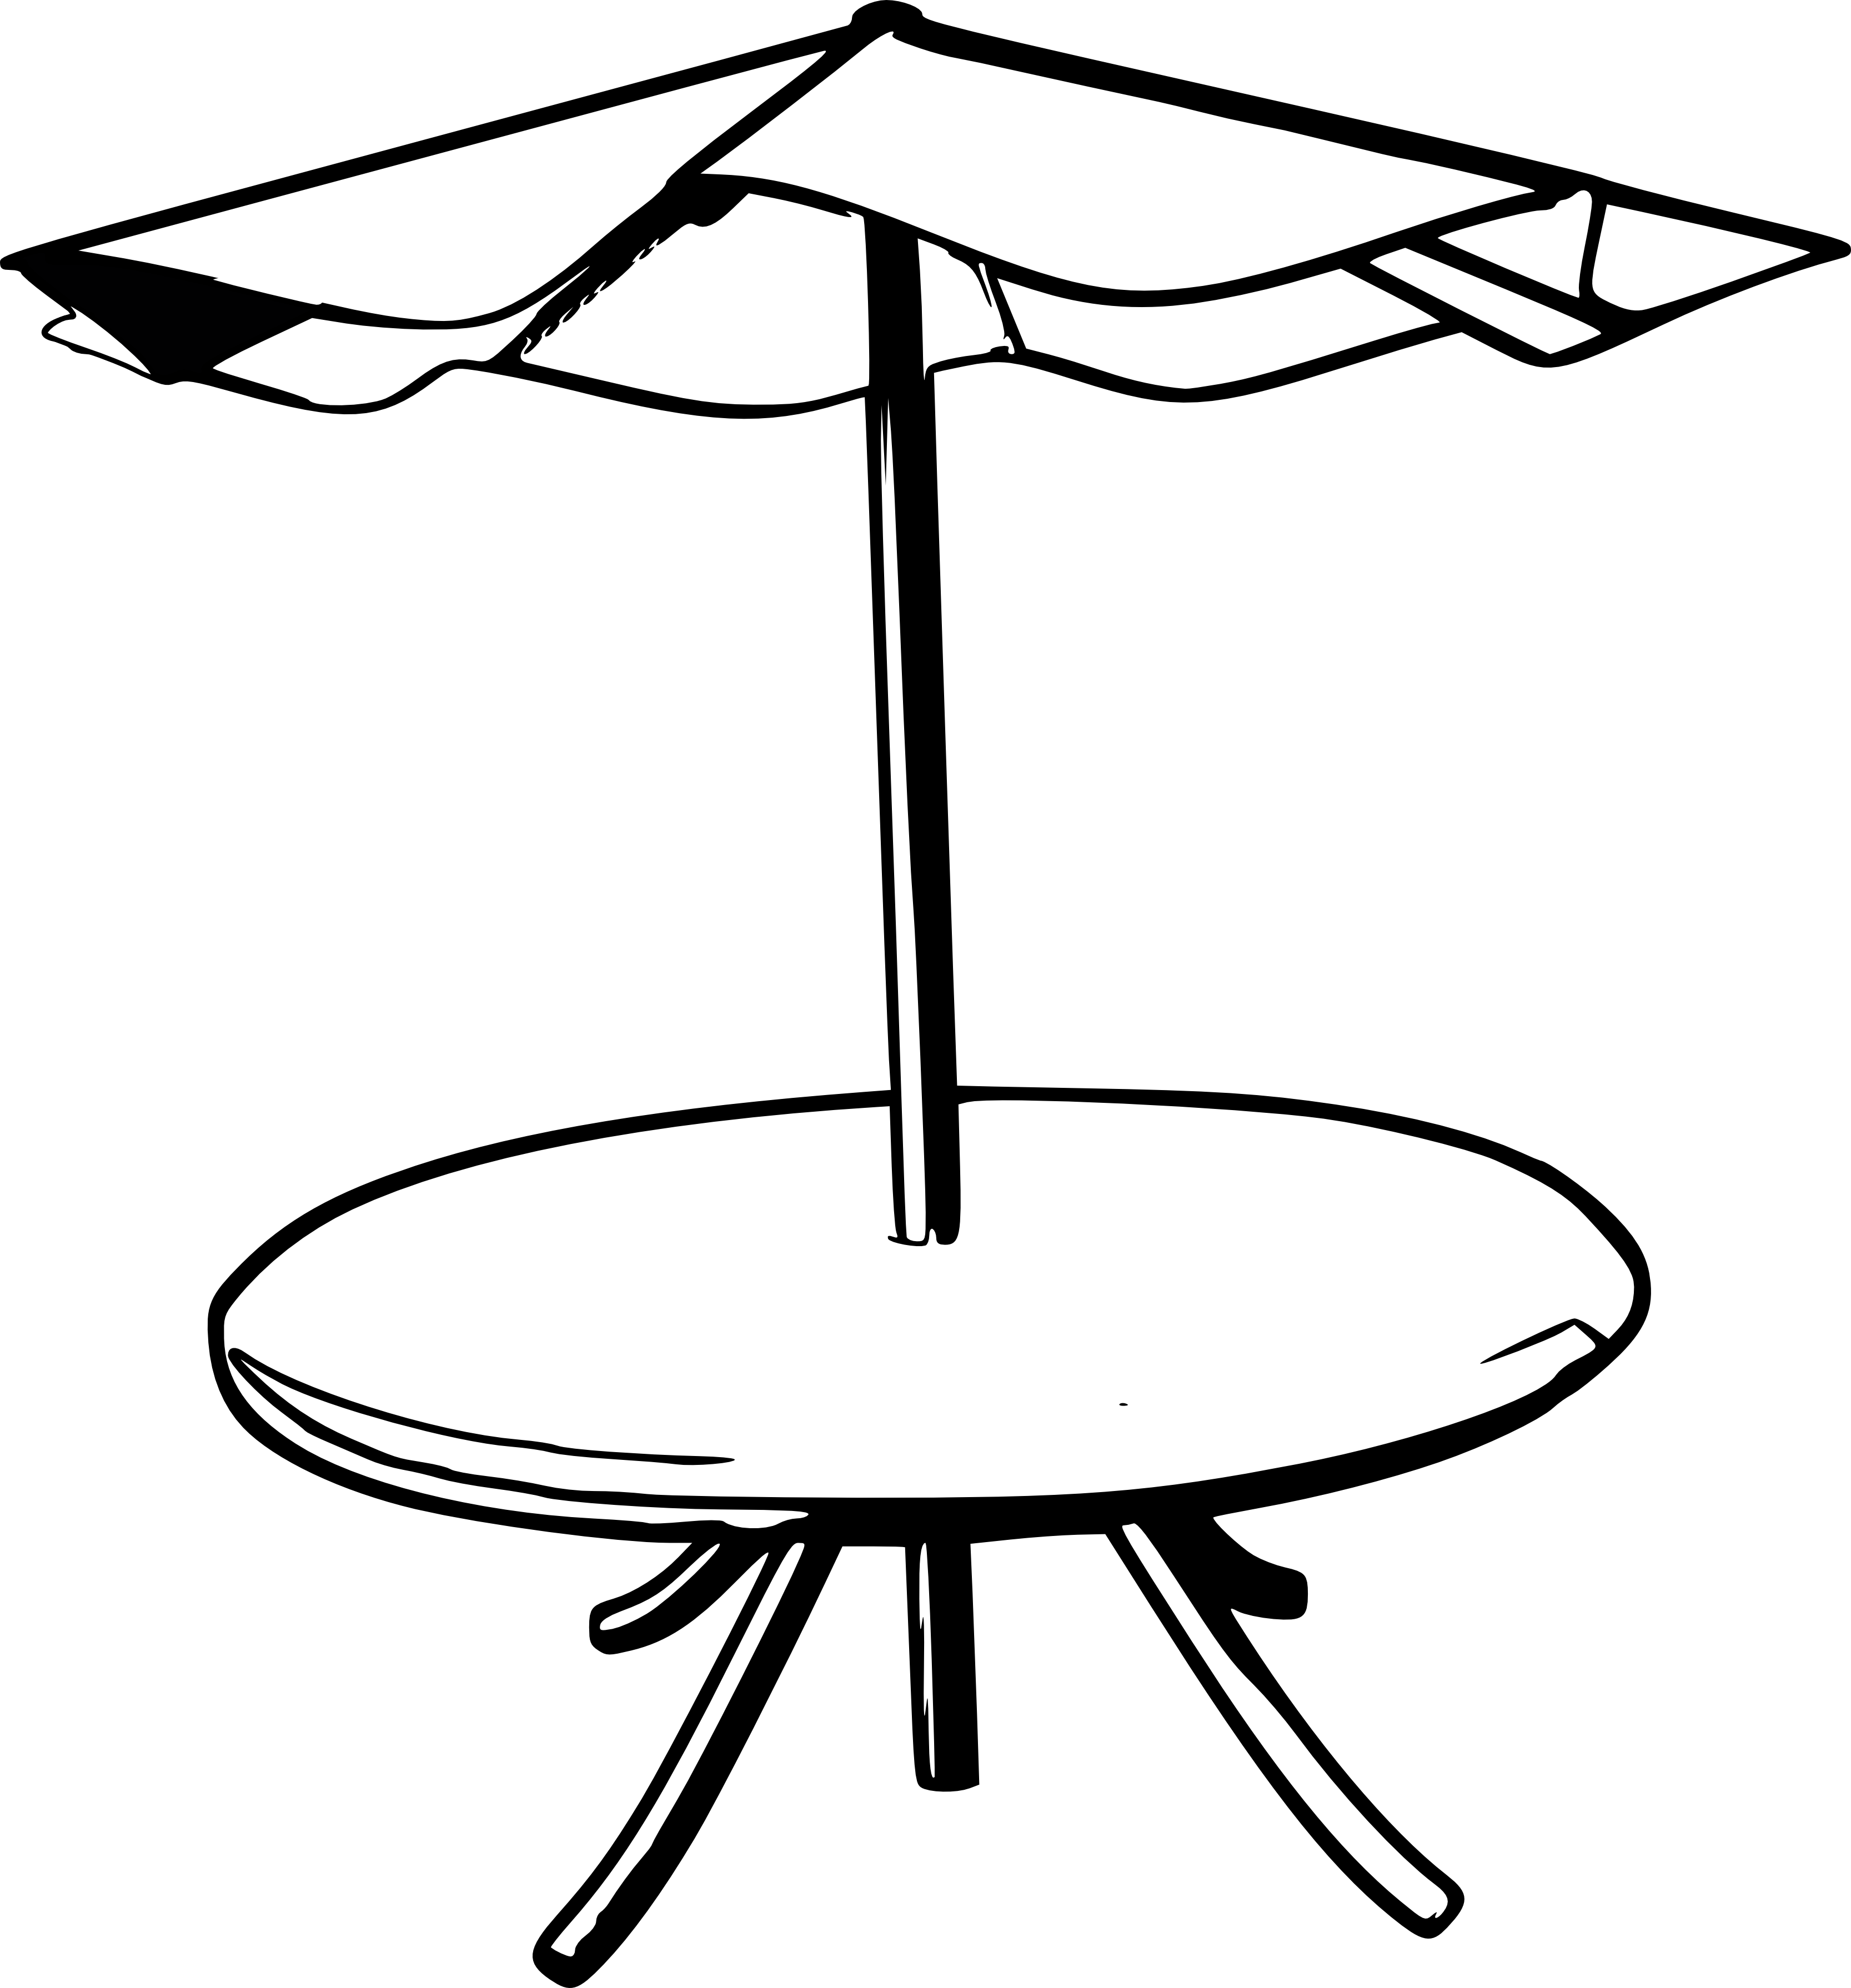 umbrella clipart black and white - photo #34